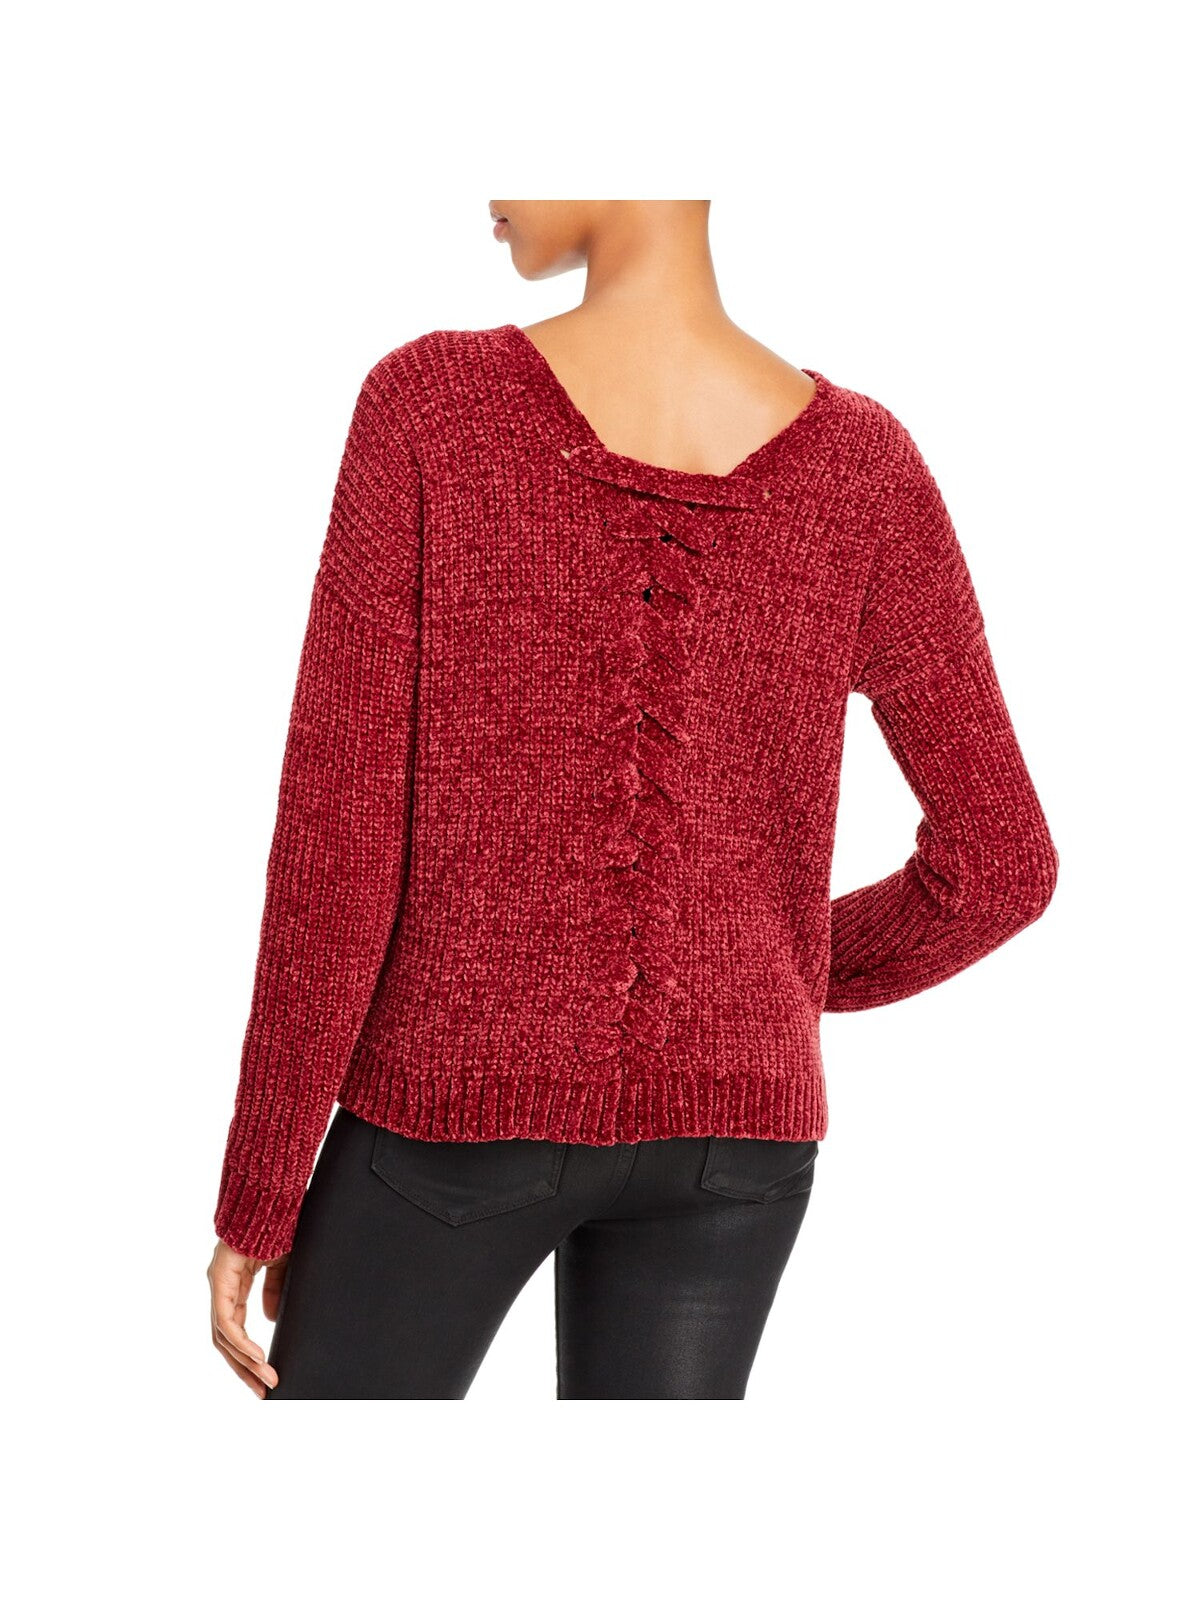 AQUA Womens Burgundy Patterned Raglan Jewel Neck Sweater S